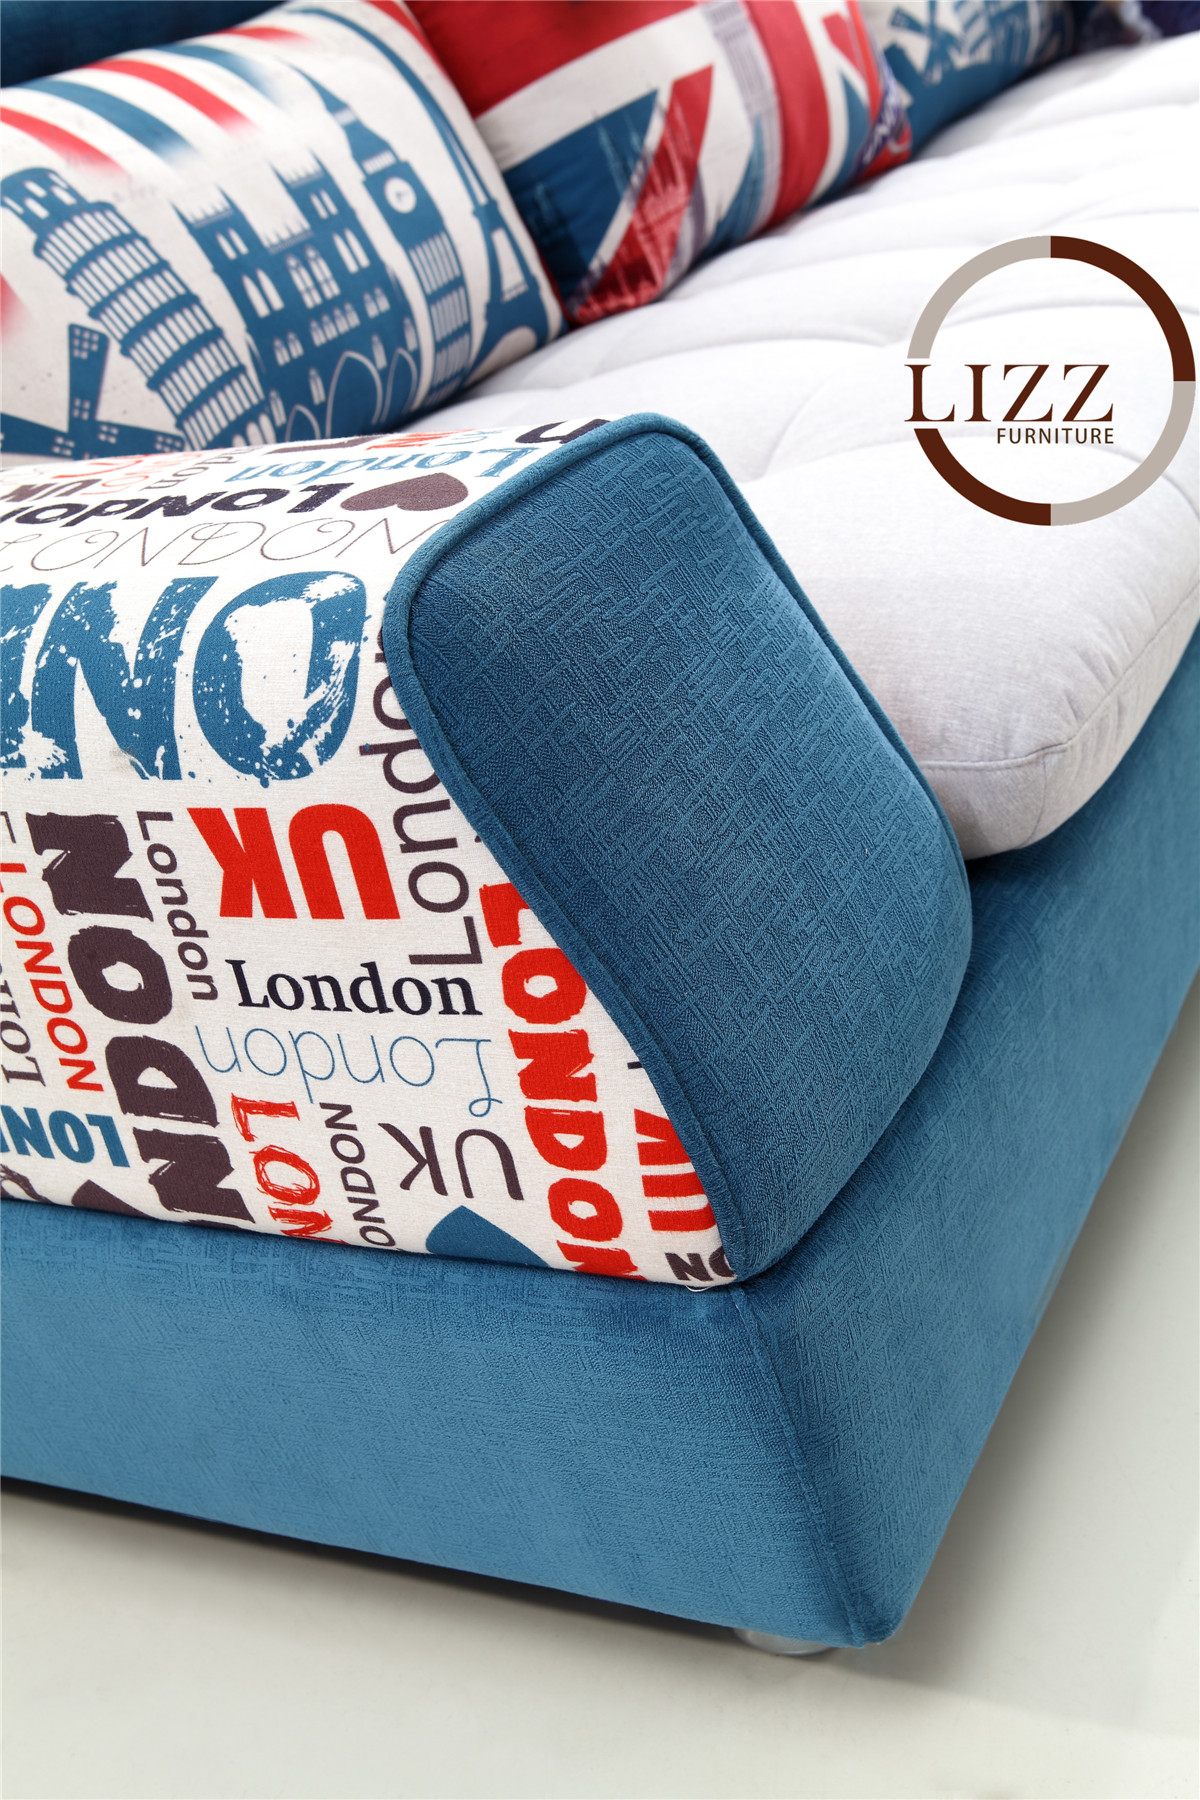 UK Fabric Sofa (Lm26)